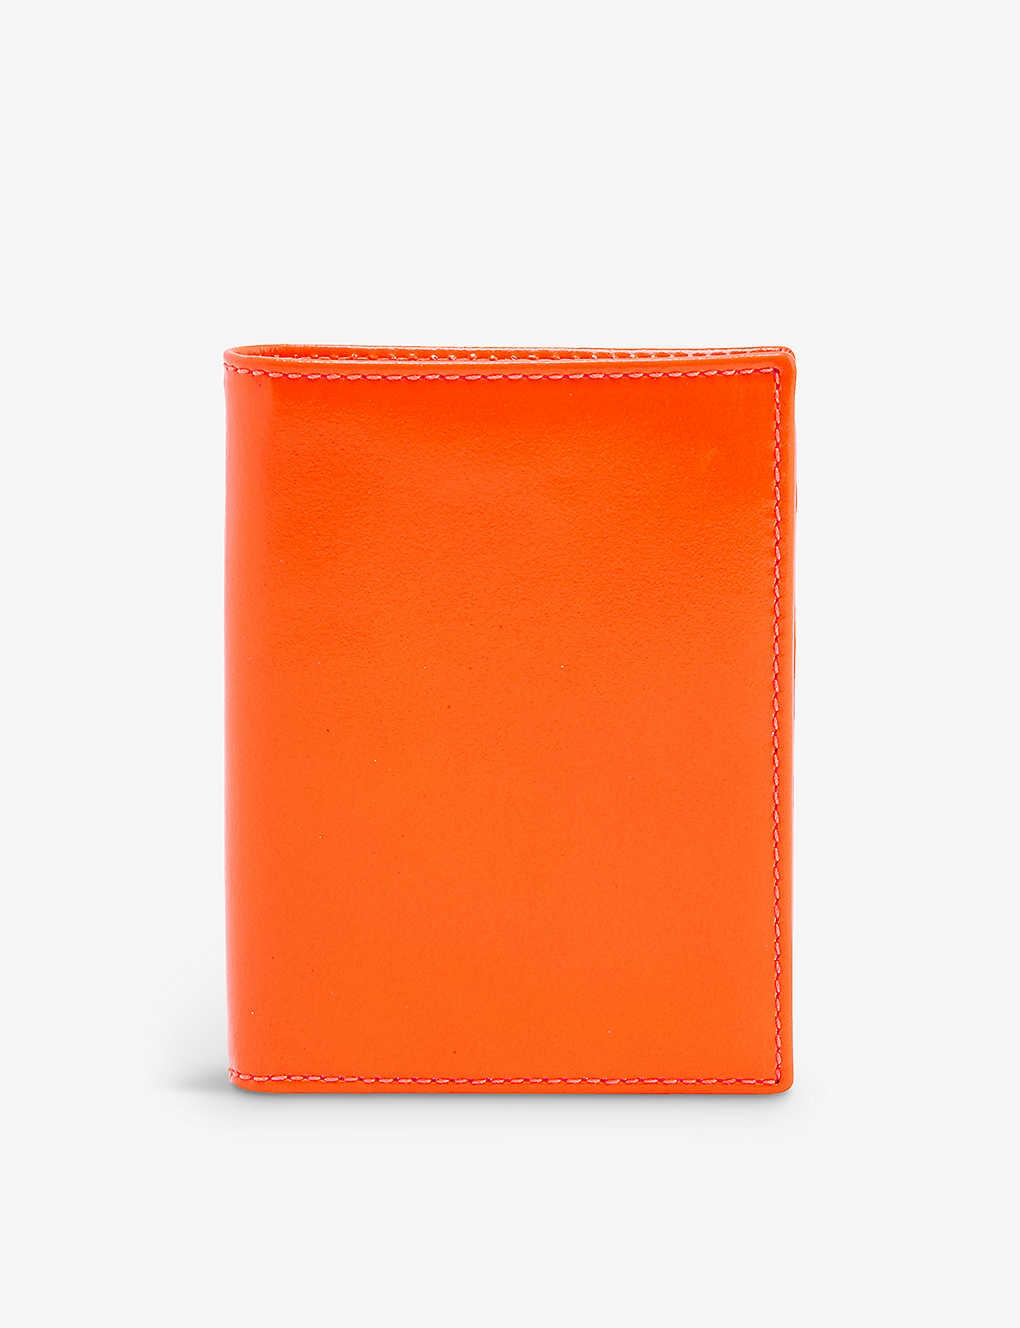 Super Fluo leather billfold wallet - 1